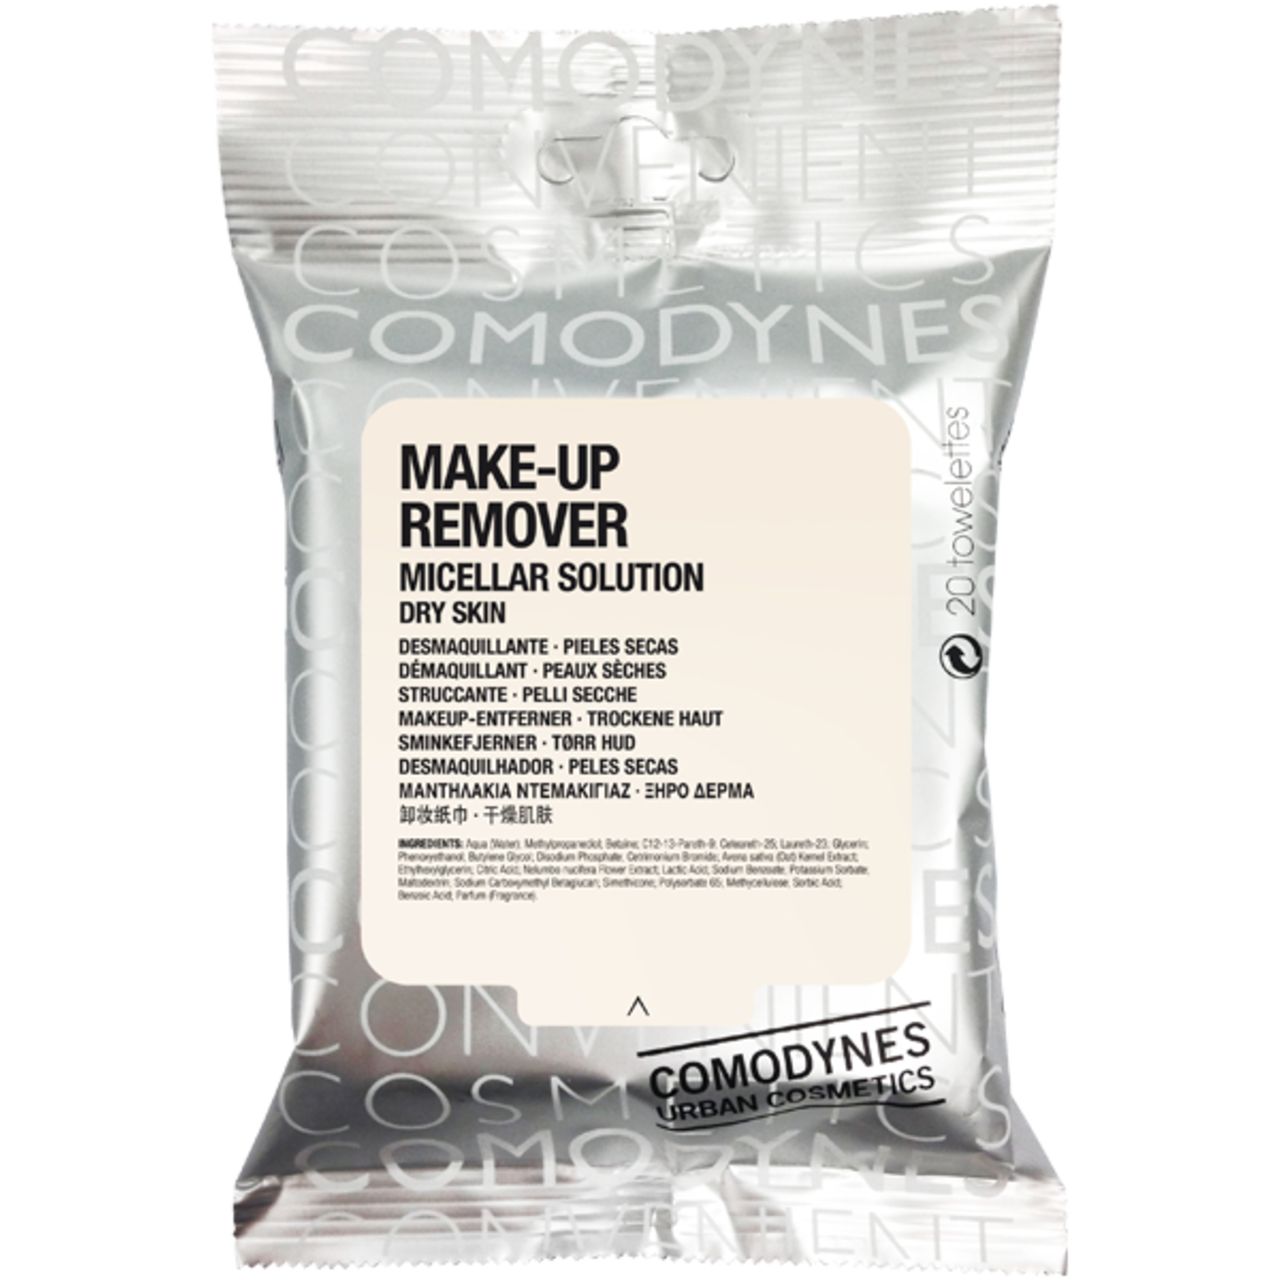 Comodynes, Make-Up Remover Micellar Solution Dry Skin